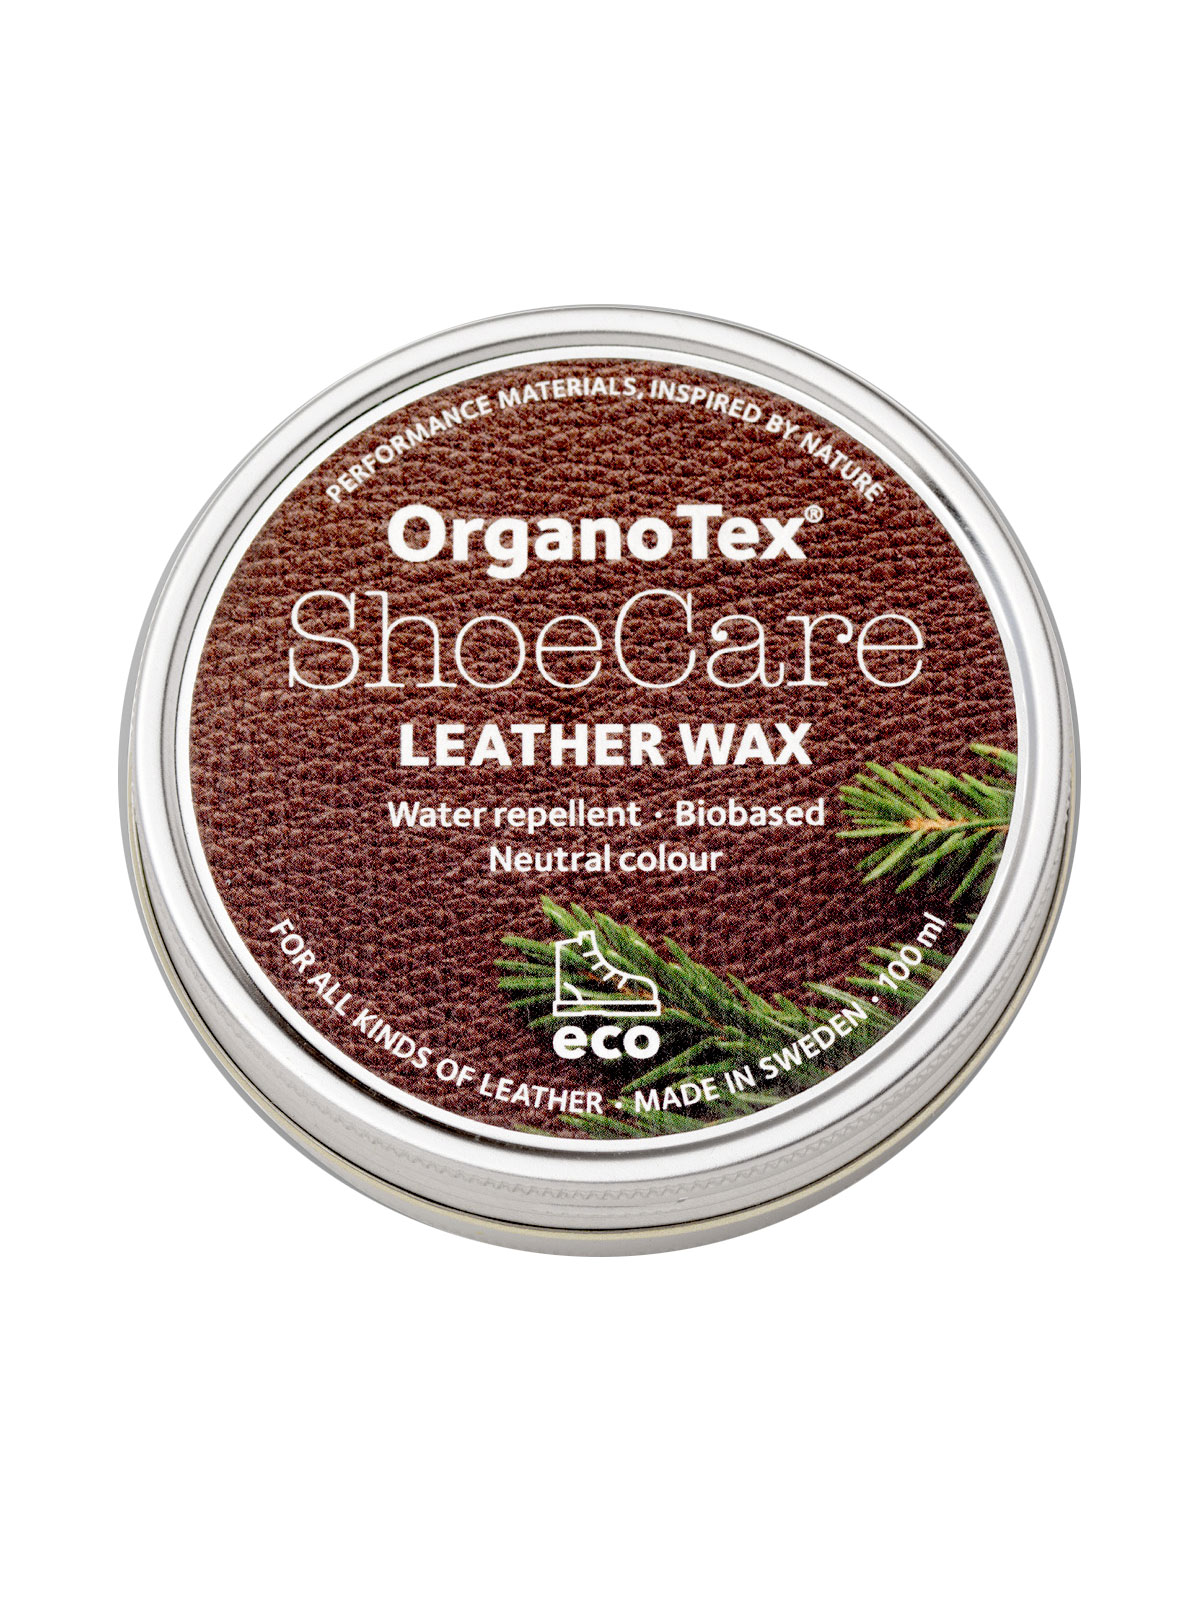 ShoeCare Leather Wax (100ml)